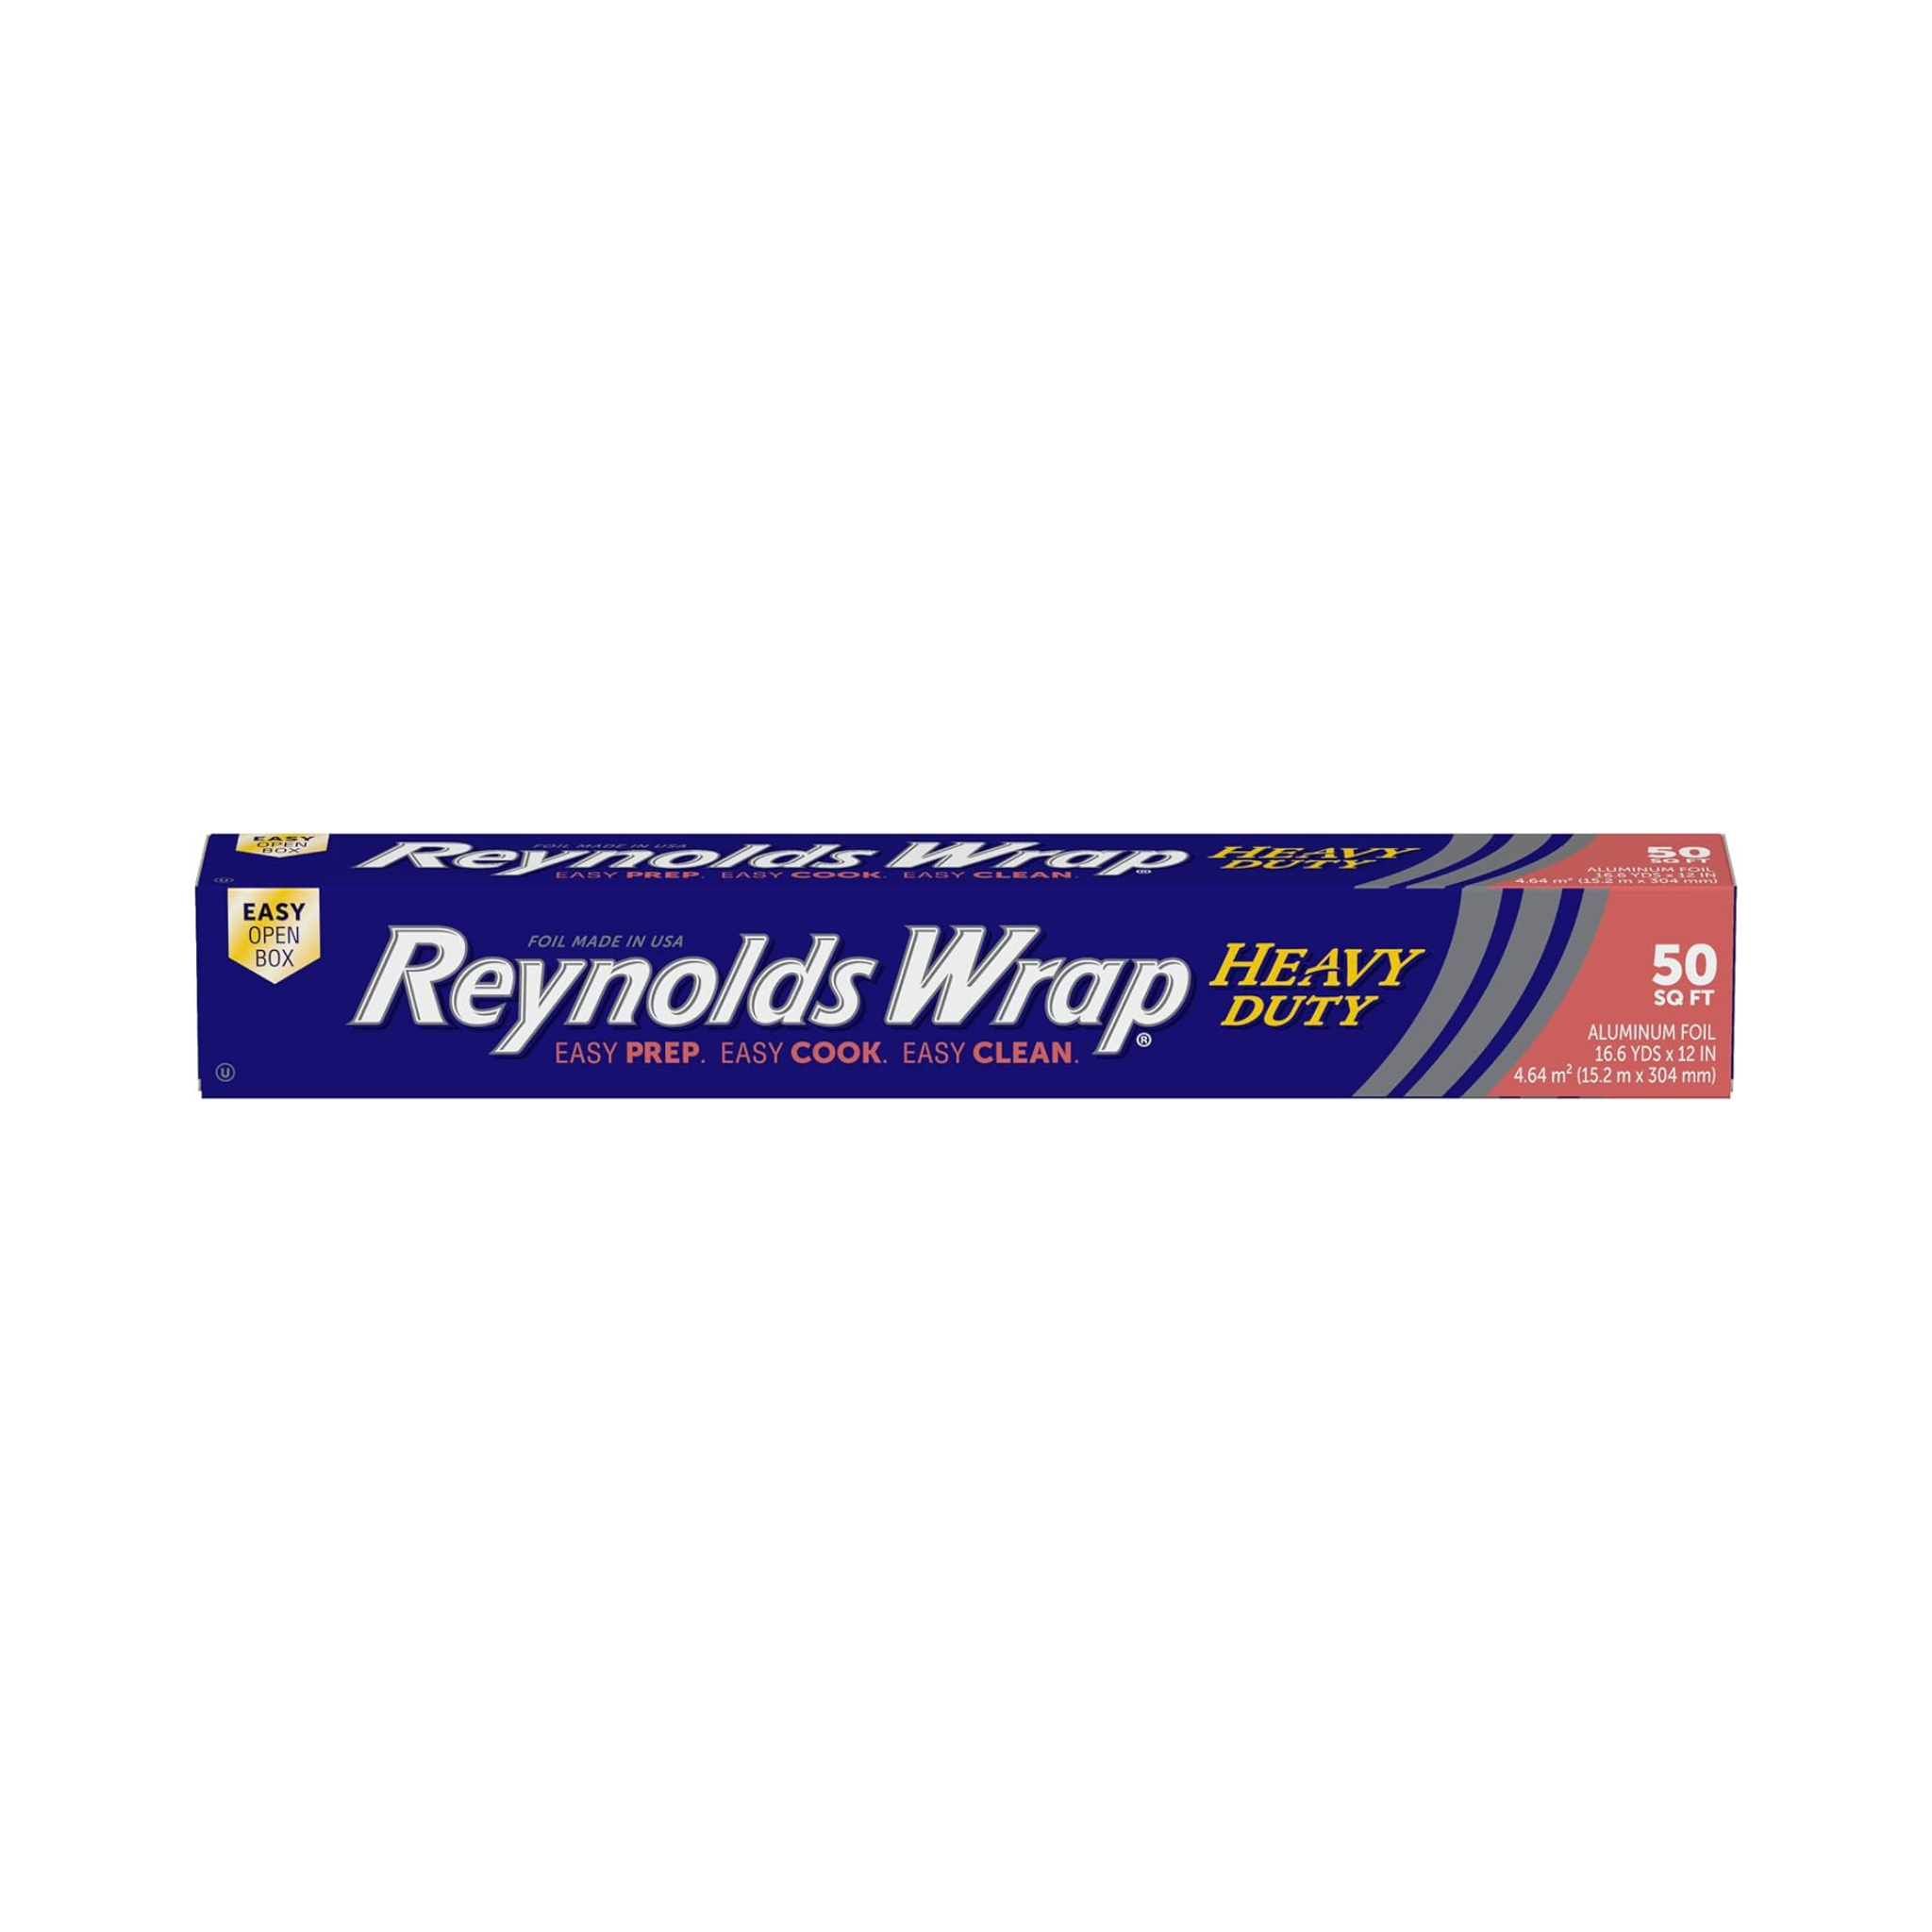 50 Sq. Ft. Reynolds Wrap Heavy Duty Aluminum Foil Roll